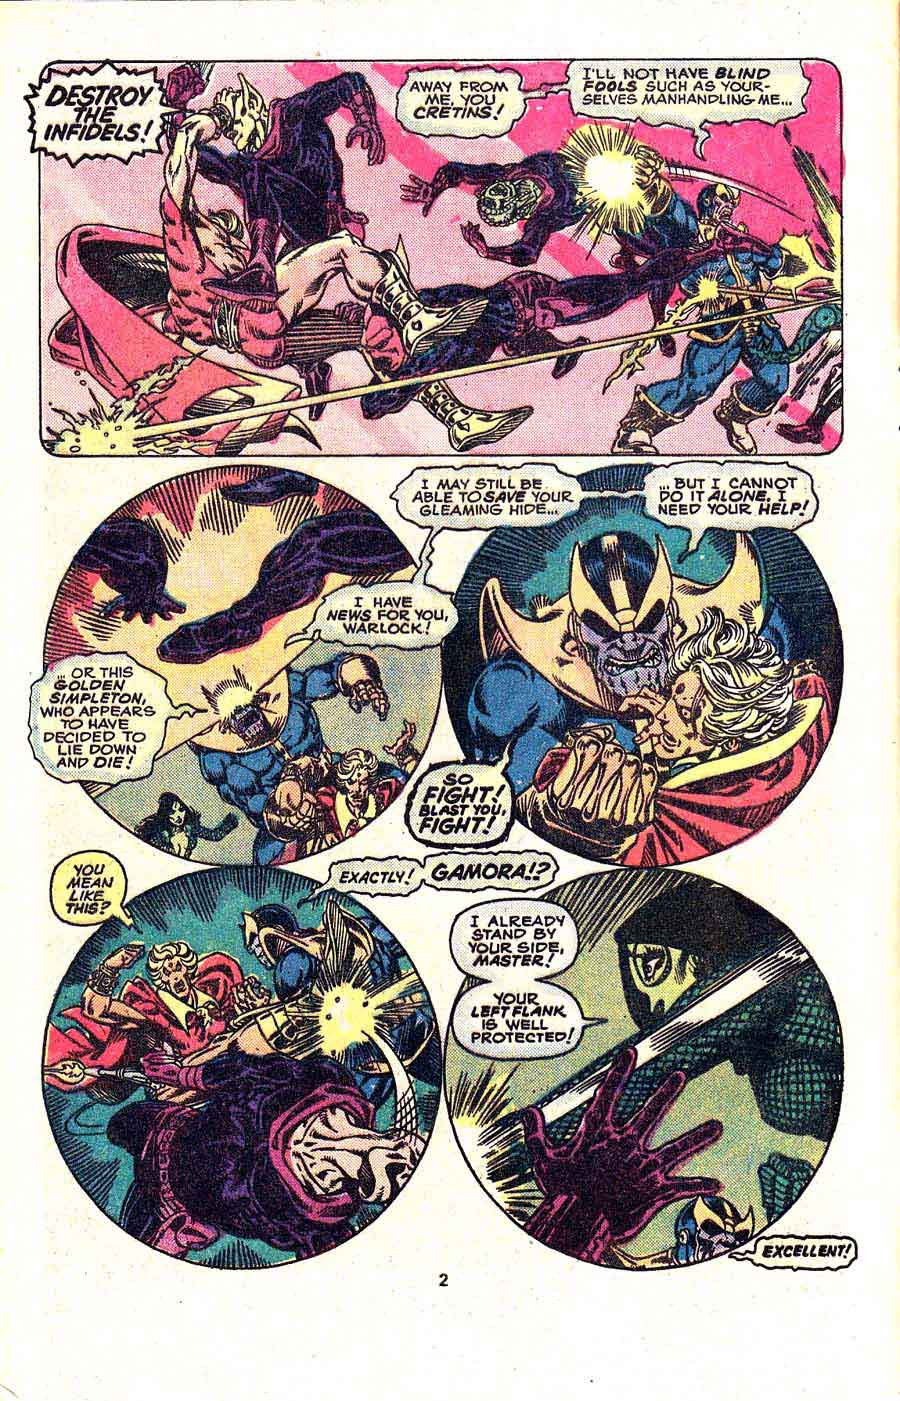 Warlock v1 #10 marvel 1970s bronze age comic book page art by Jim Starlin